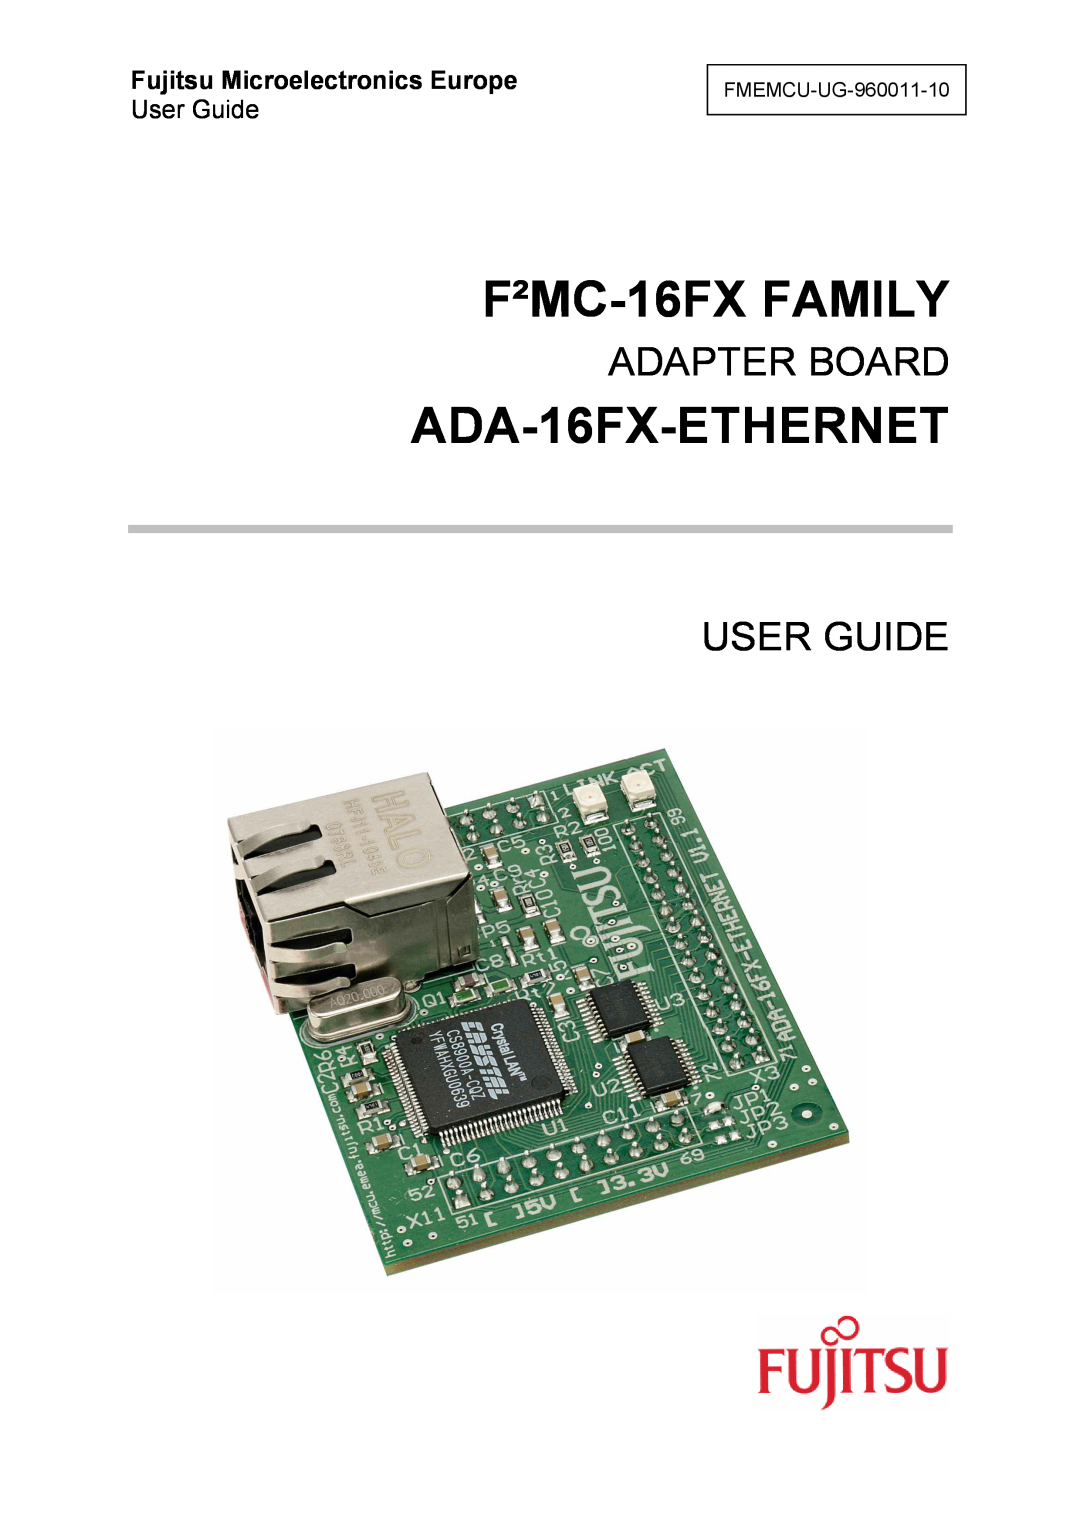 Fujitsu FMC-16FX FAMILY manual F²MC-16FX FAMILY, ADA-16FX-ETHERNET, Adapter Board, User Guide 